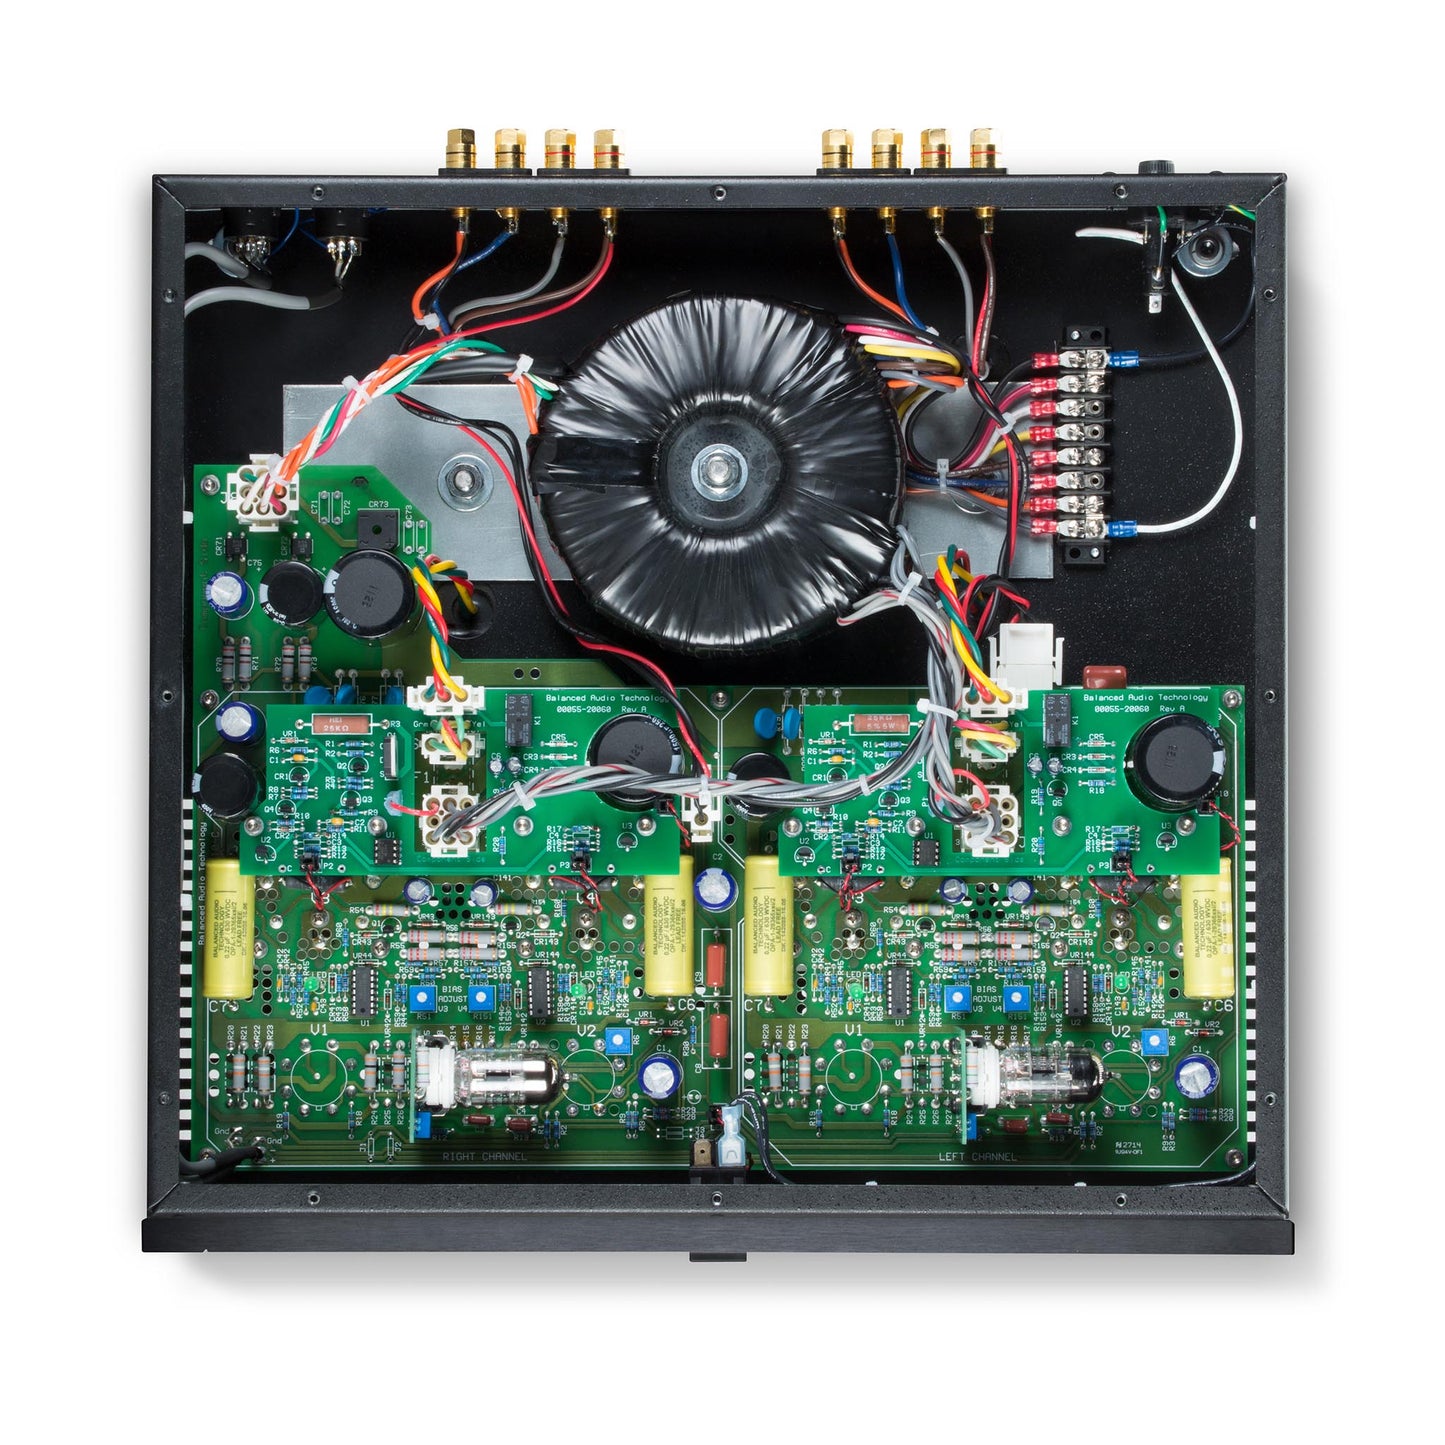 Balanced Audio Technology VK-56SE Power Amplifier